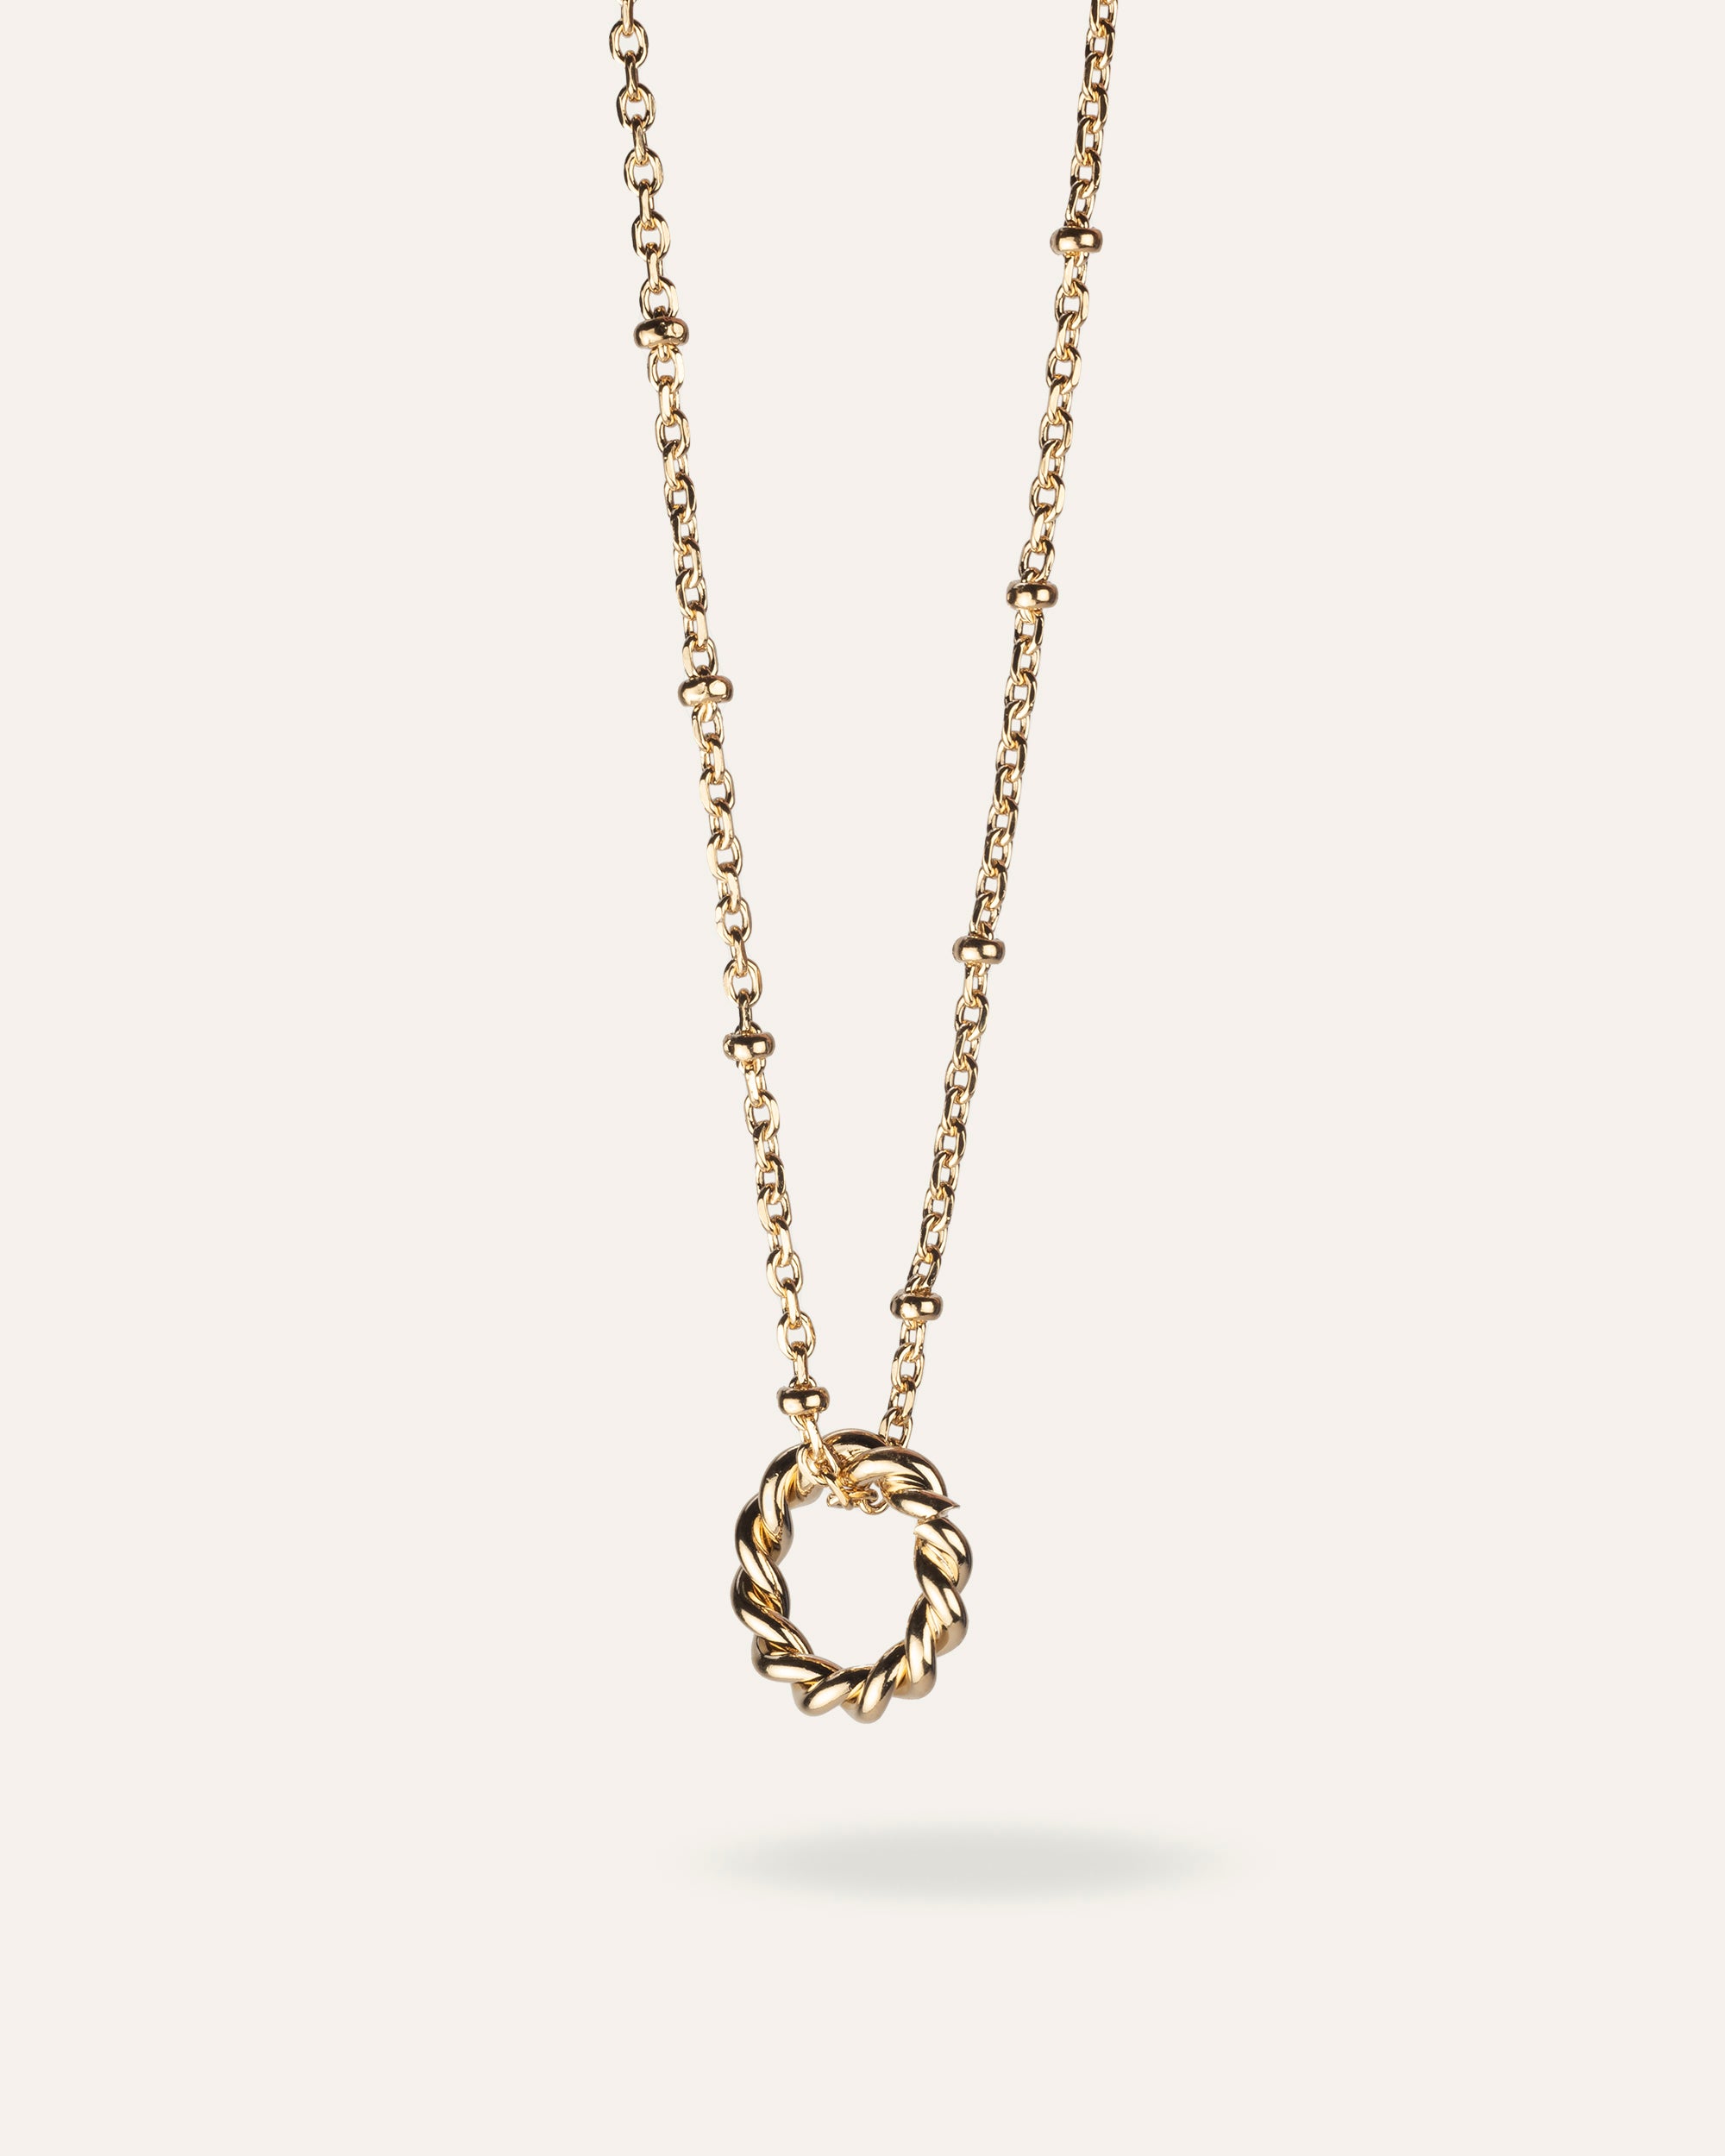 Gabrielle gold necklace